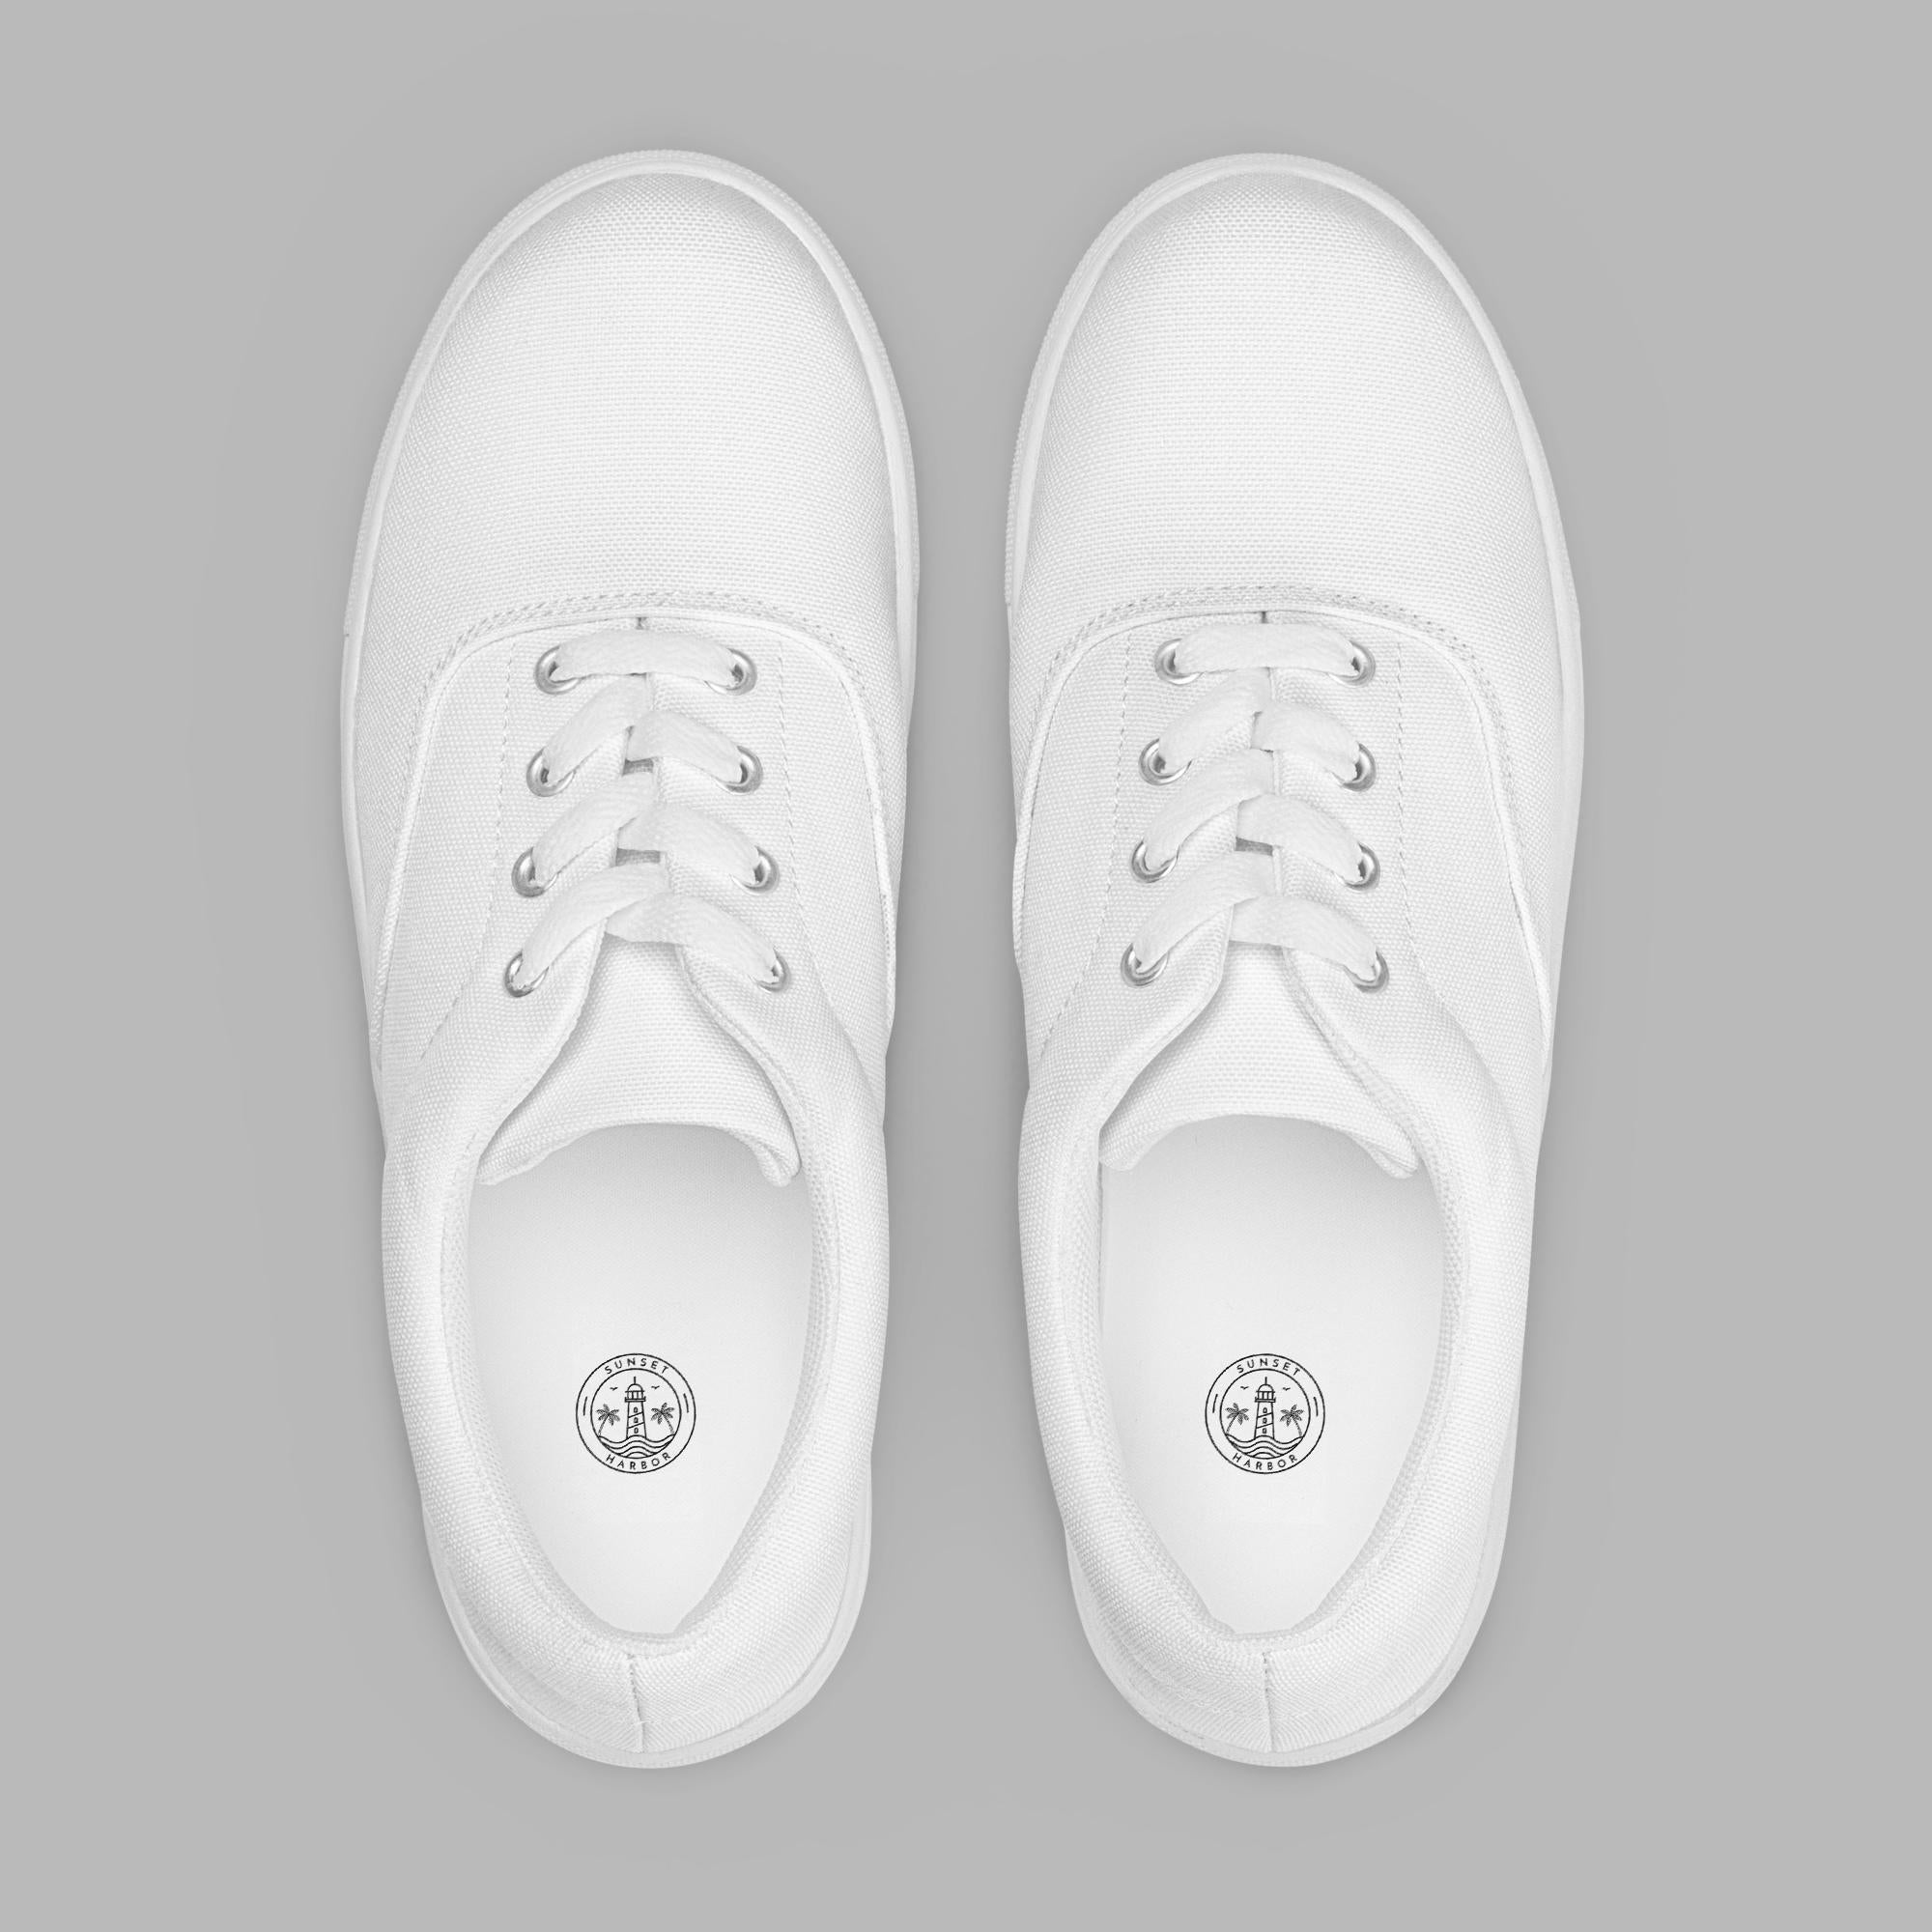 Women’s lace-up canvas shoes - White